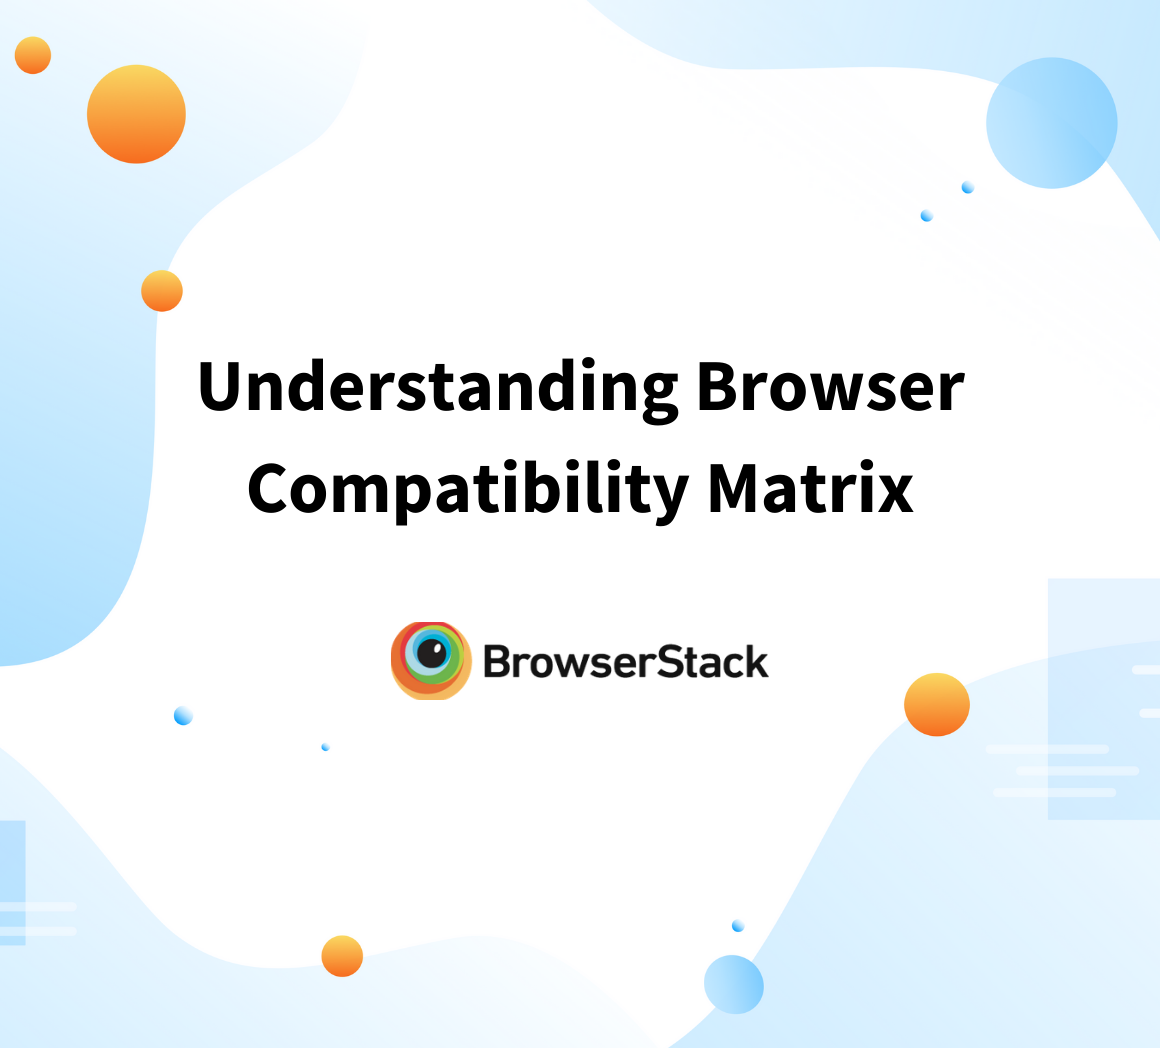 Browser compatibility matrix